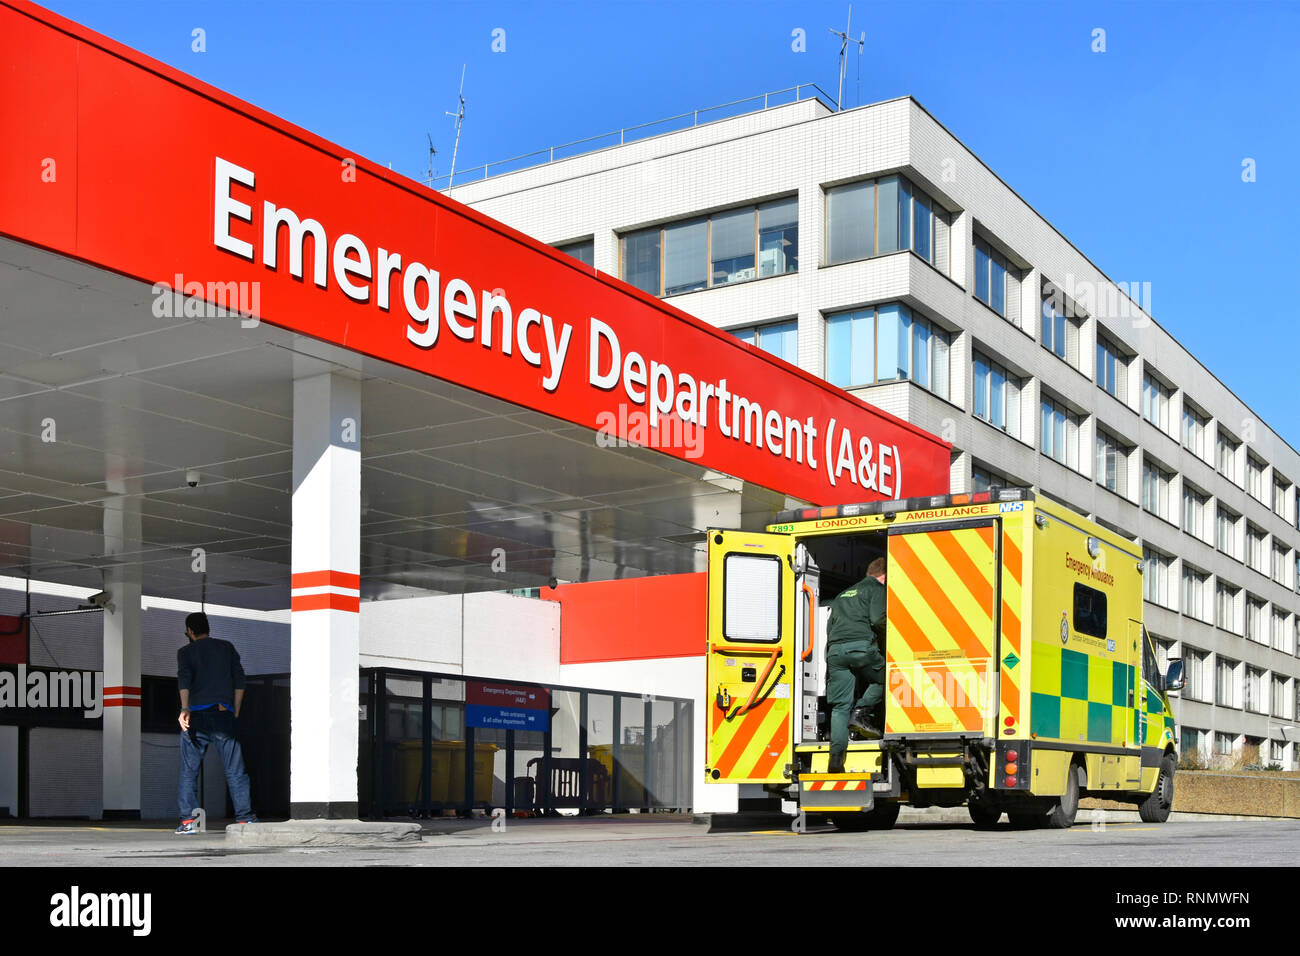 Emergency department A&E London NHS national health service ambulance & driver outside entrance to St Thomas hospital building Lambeth England UK Stock Photo